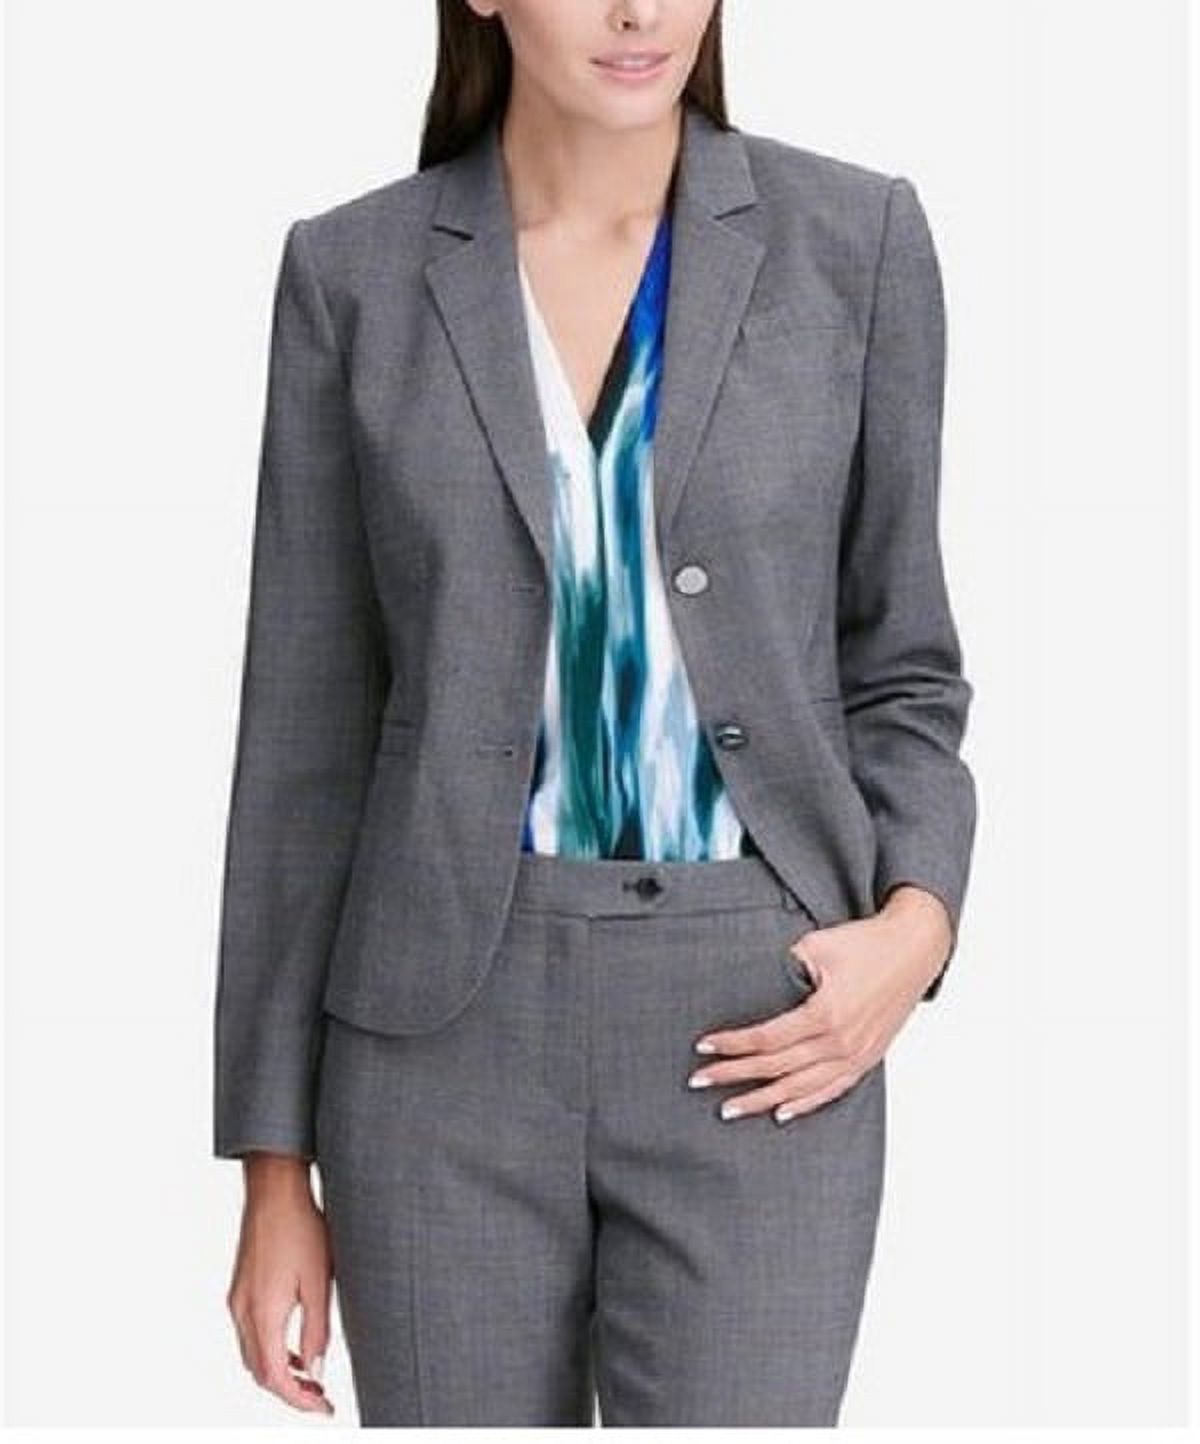 Calvin Klein Women's Glen Plaid Two-Button Jacket Silver Size 6 - image 1 of 3